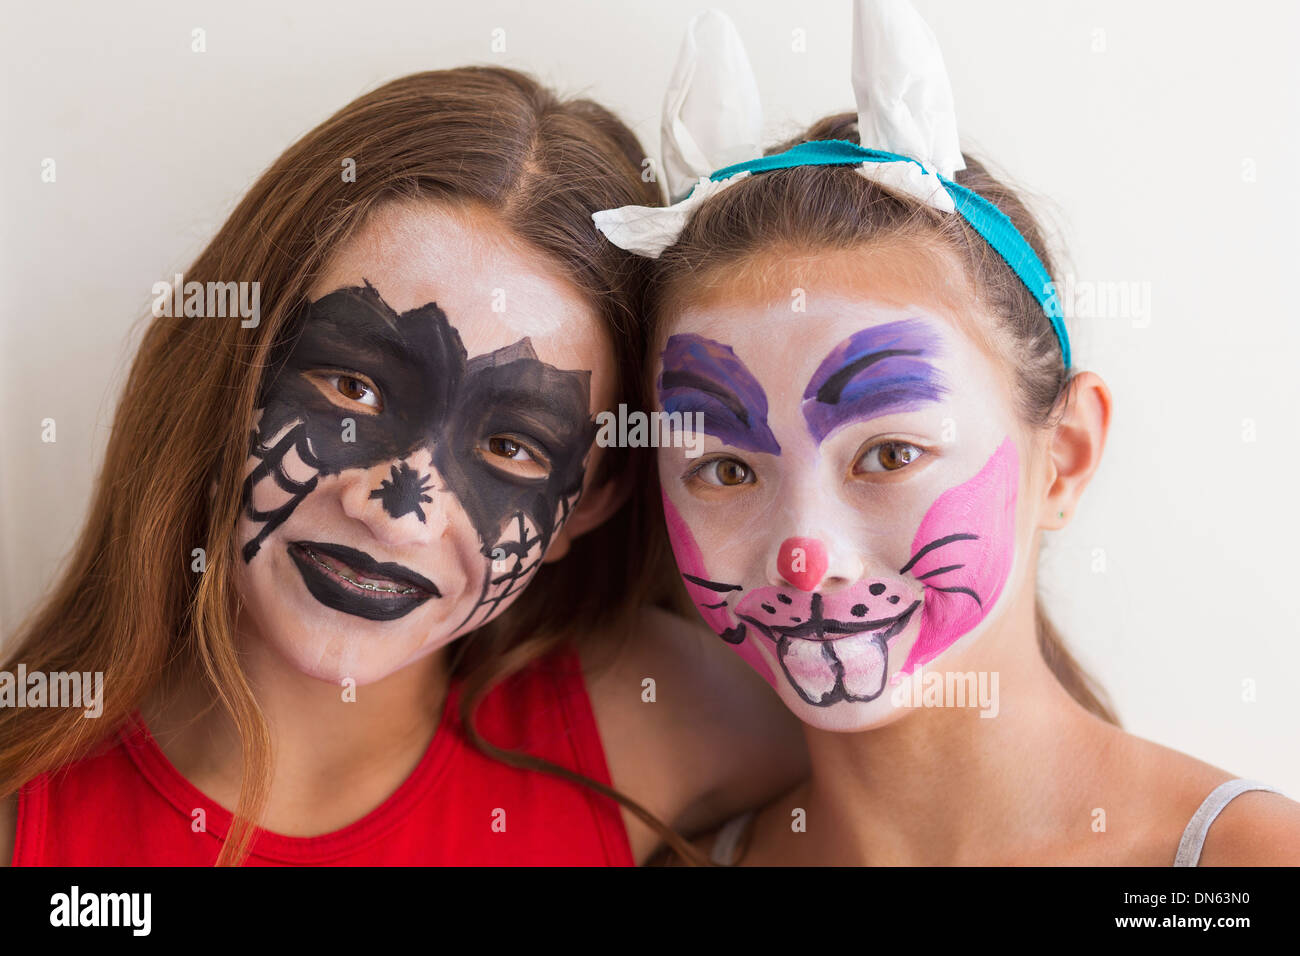 Mixed race girls wearing face paint Stock Photo